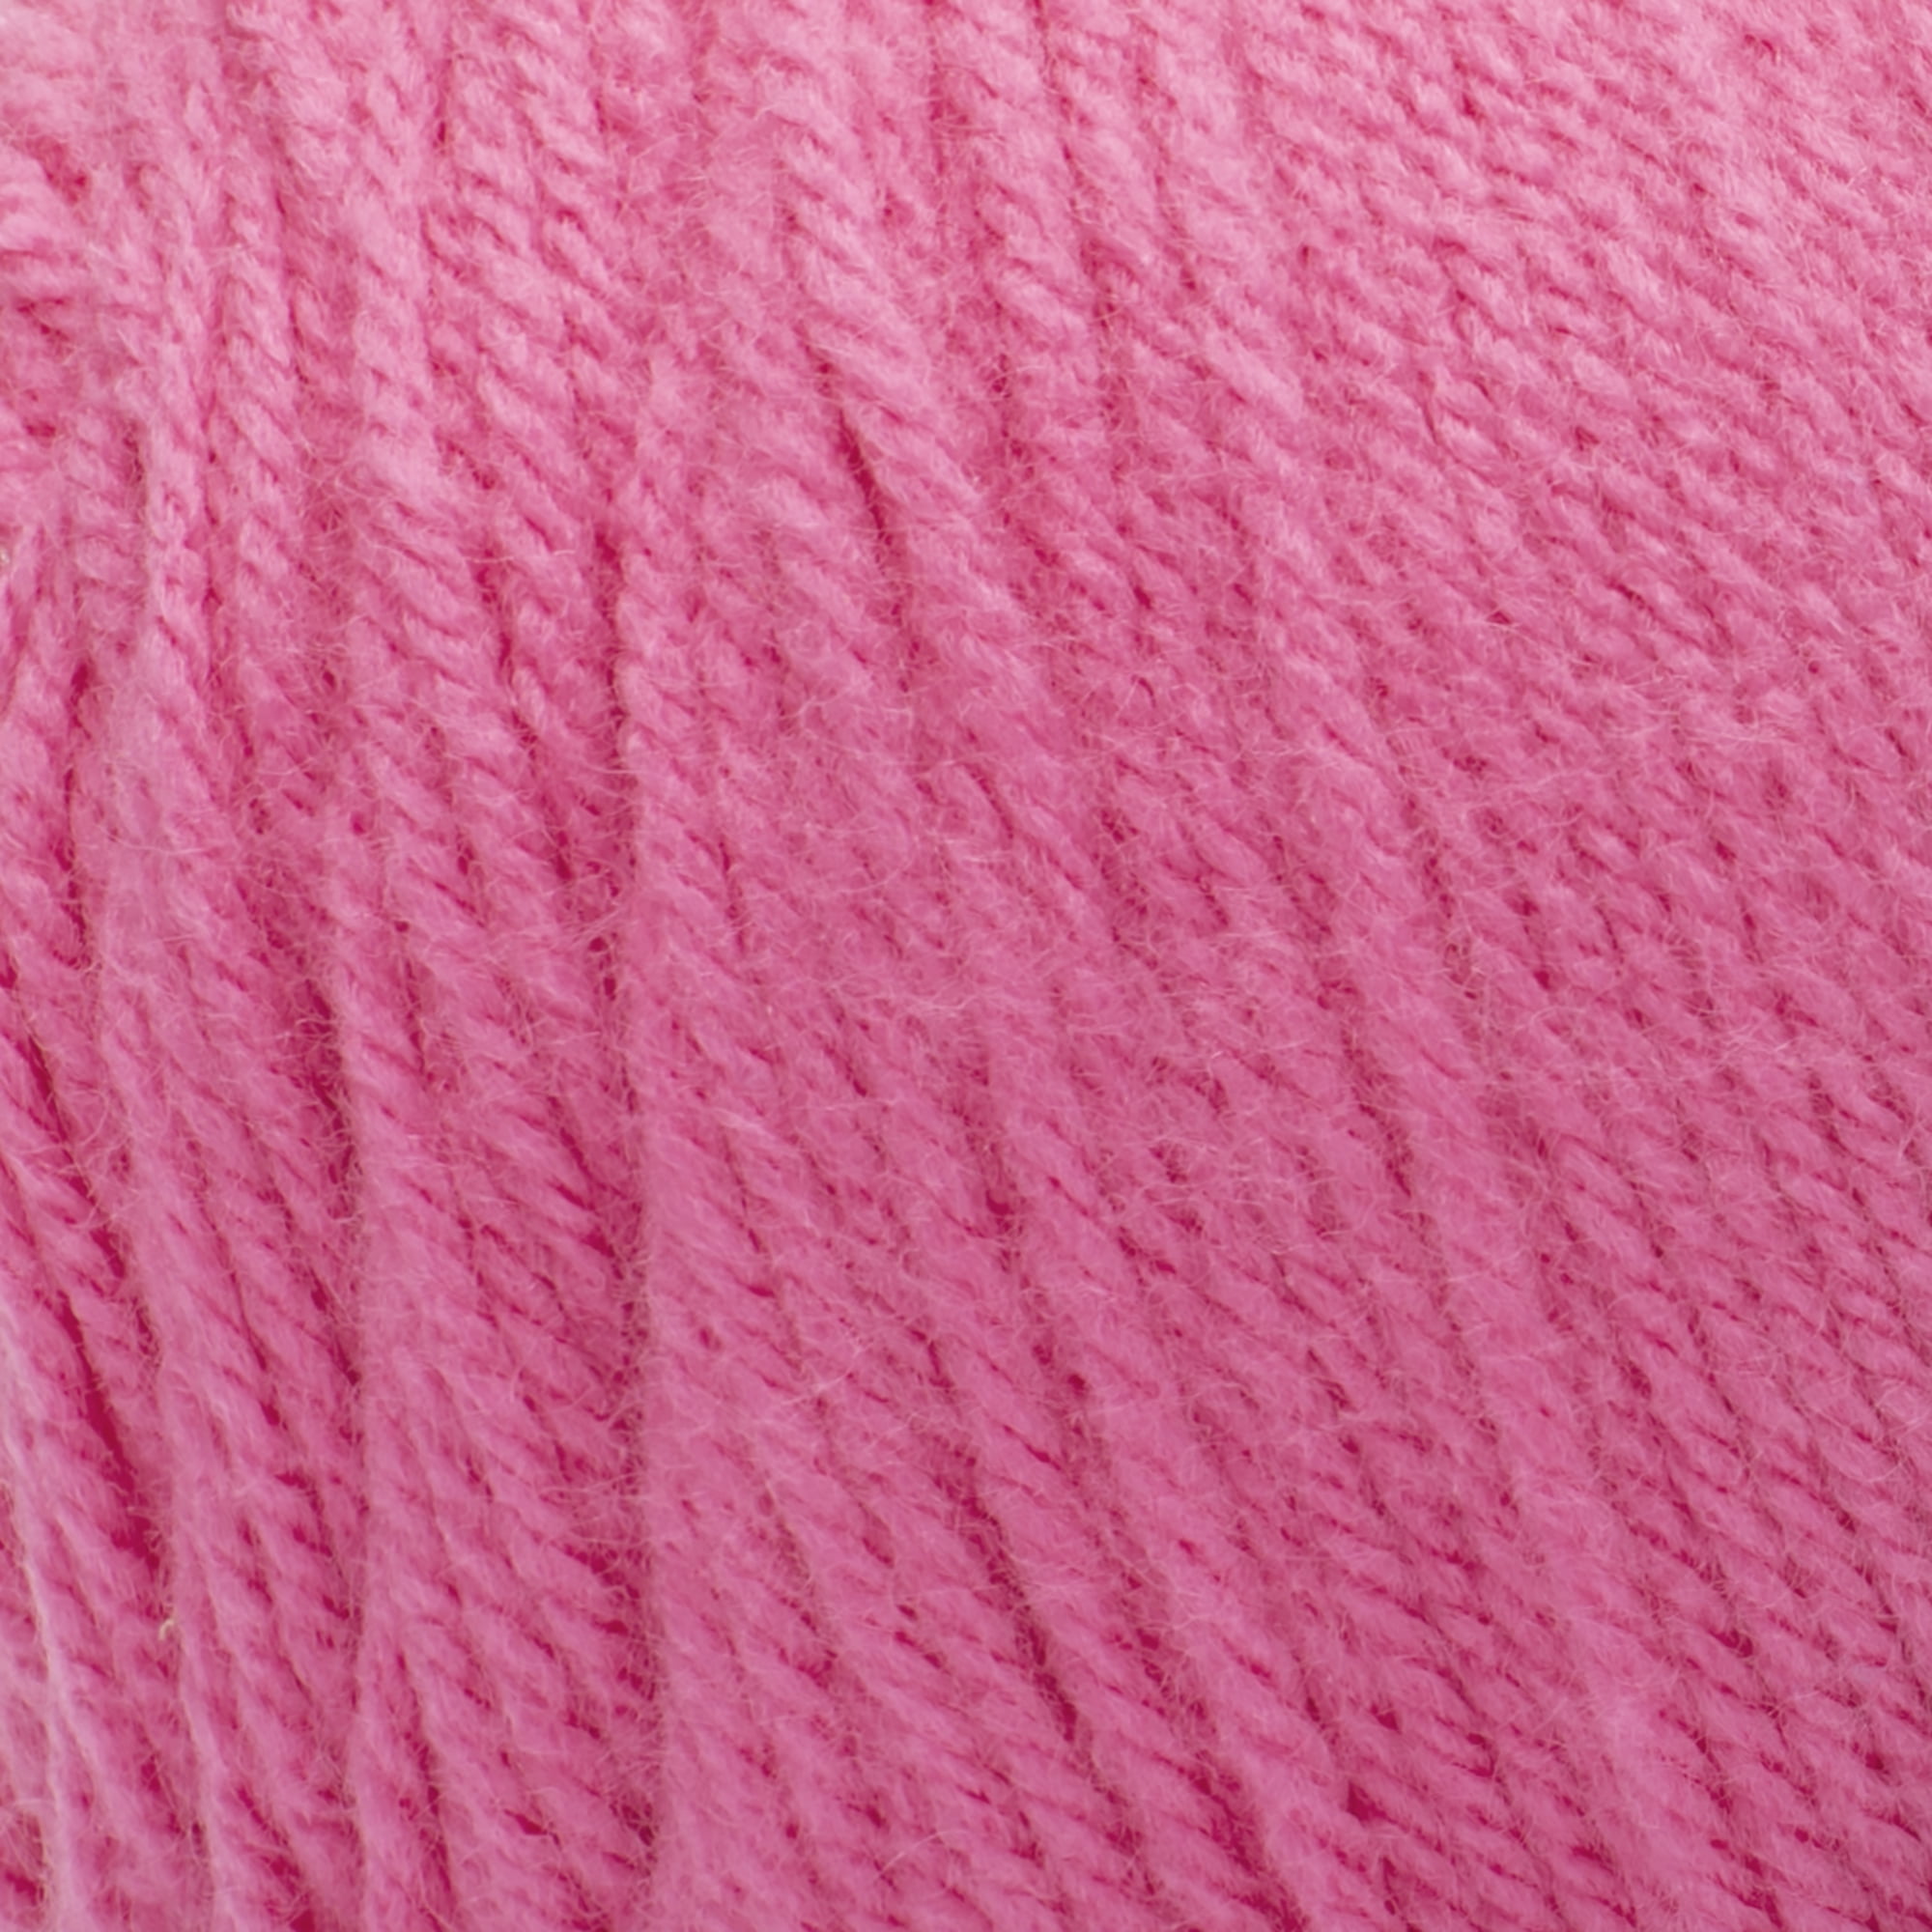 Natural Cotton Air Light Pink, Spring - Summer Yarns